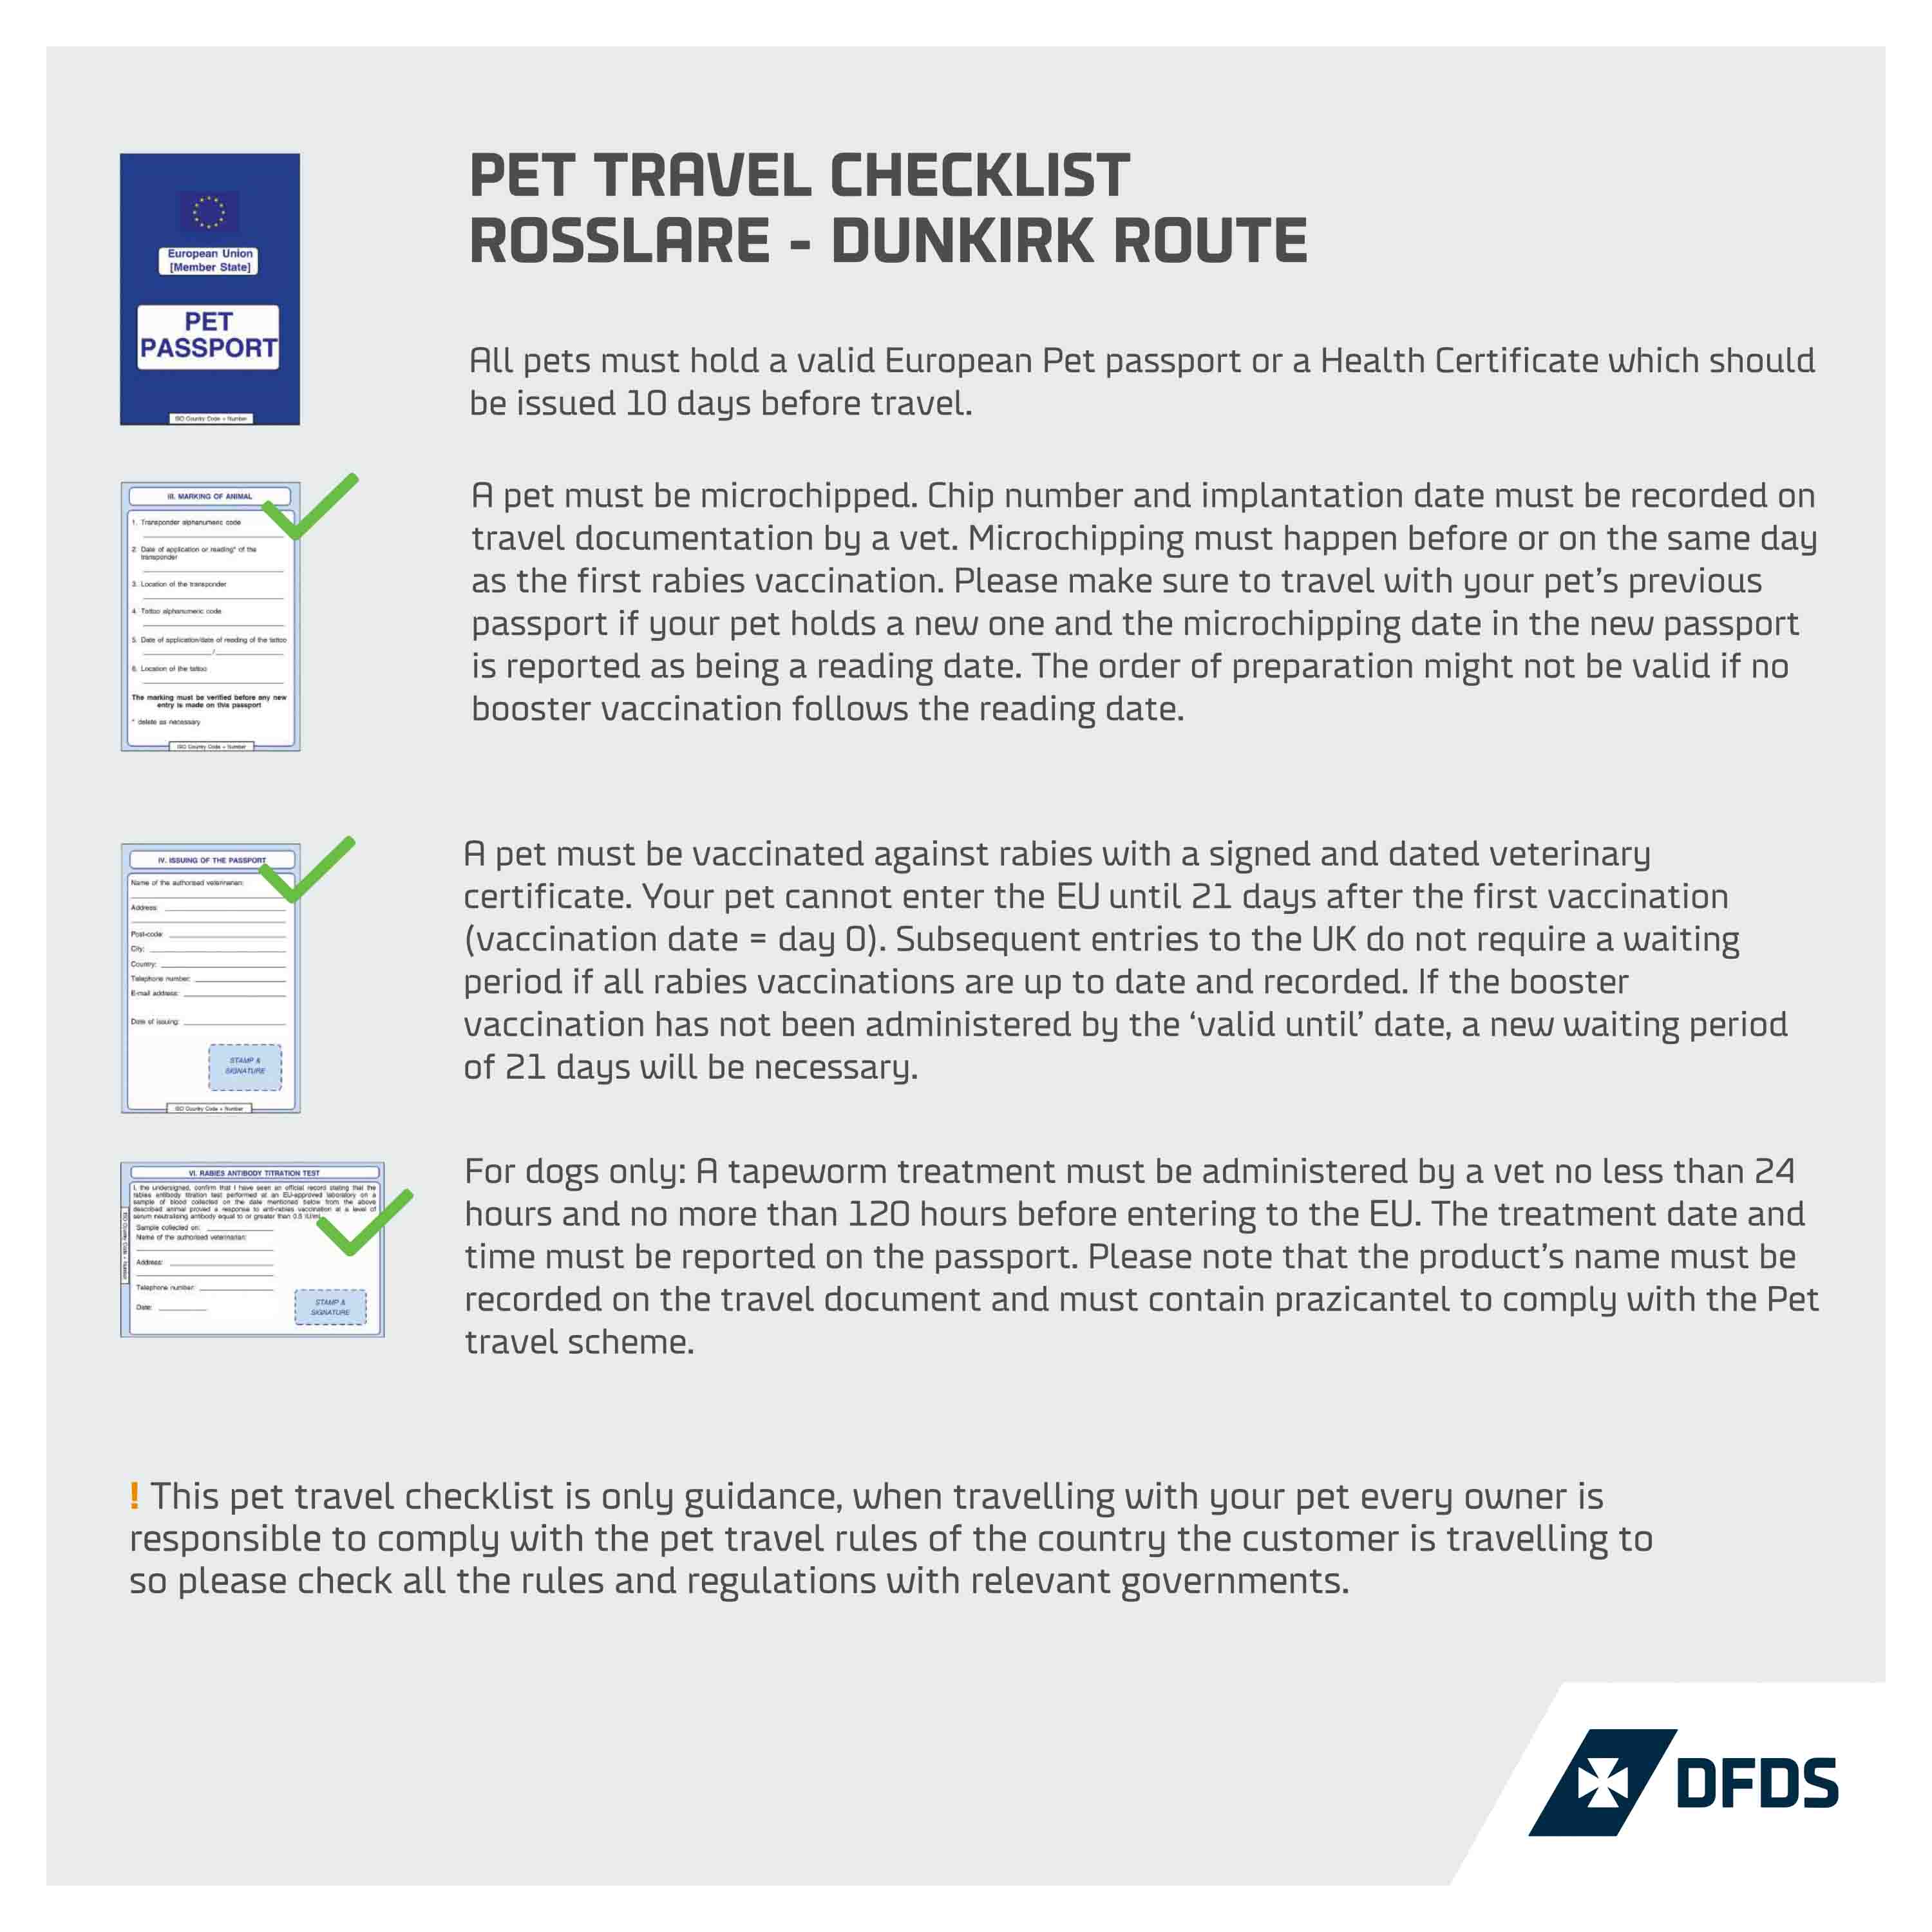 Please check the Pet Travel Checklist here